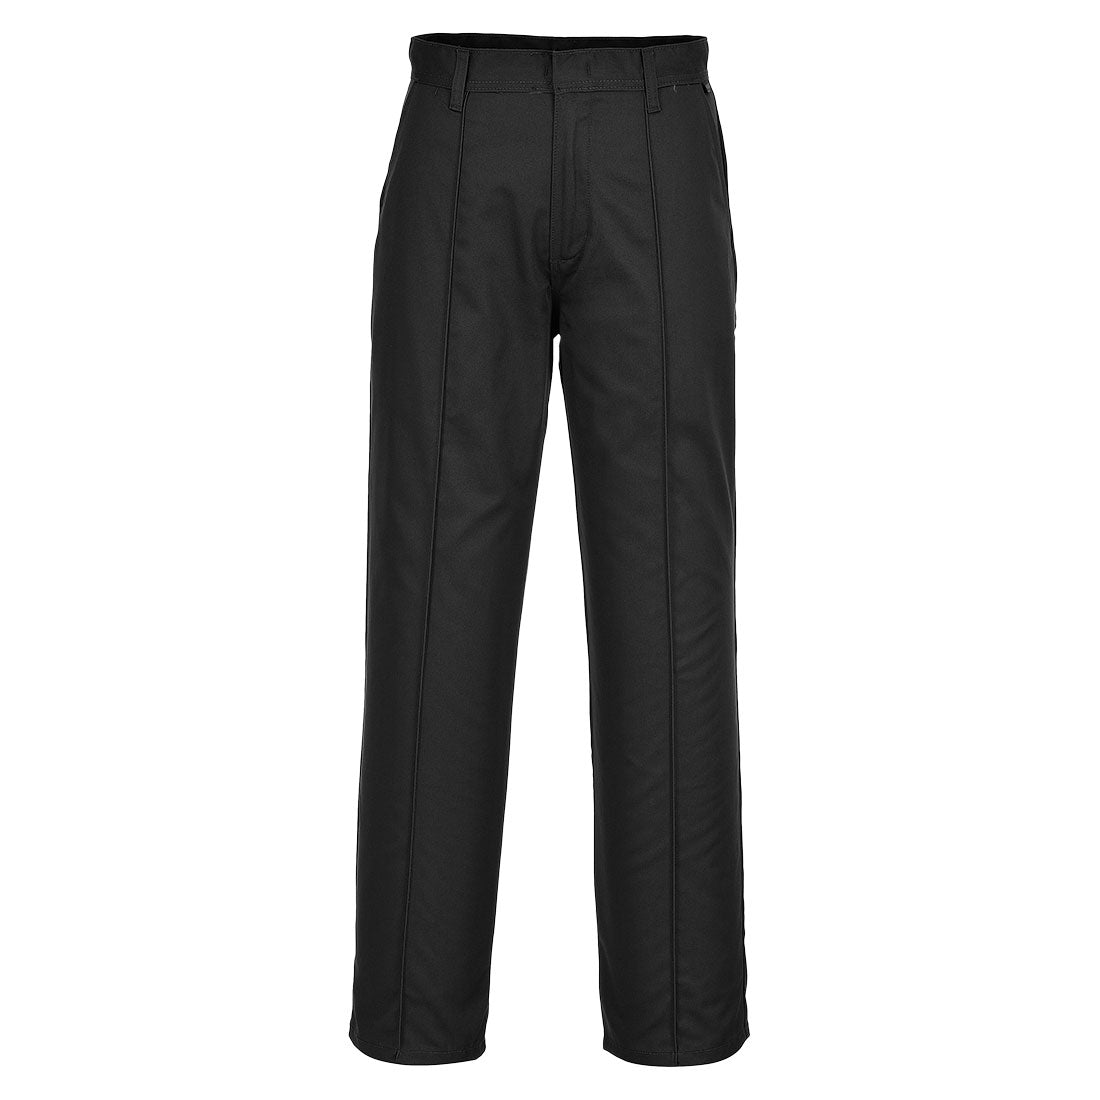 Portwest 2885 - Black Preston Mens Work Trousers with Side Pockets sz 46" Regular